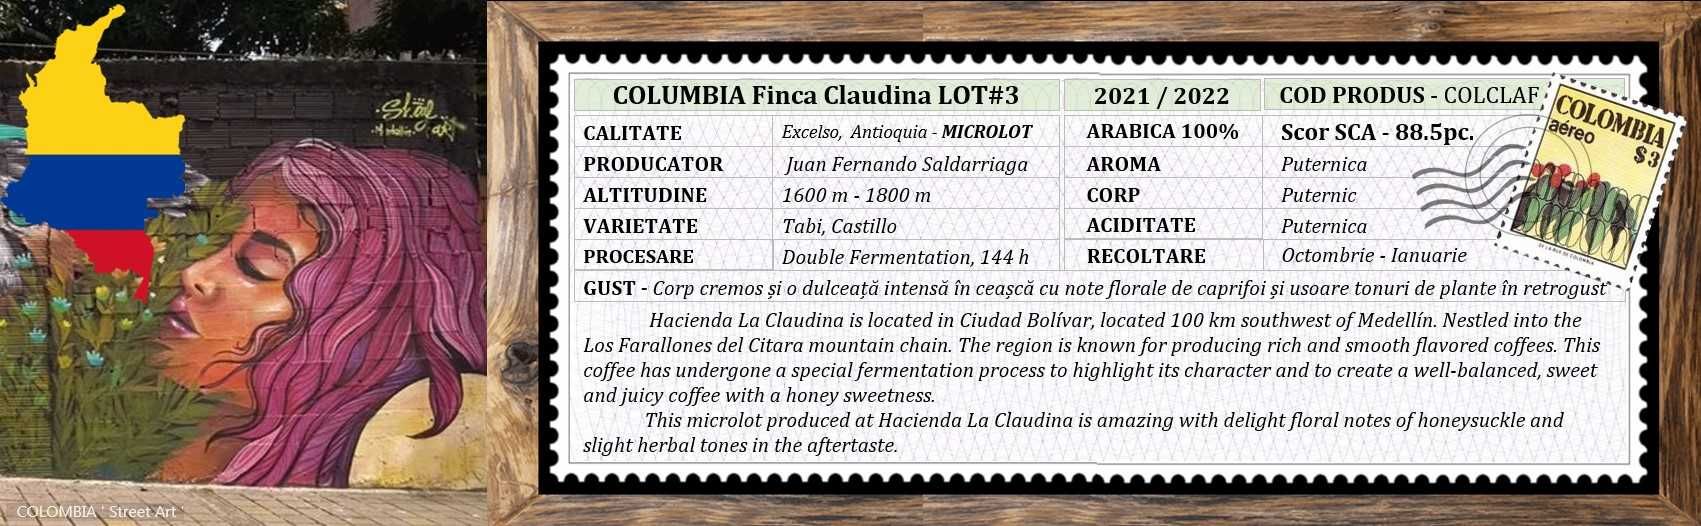 COLUMBIA Hacienda La Claudina Lot#3 - MICROLOT - Cafea Verde